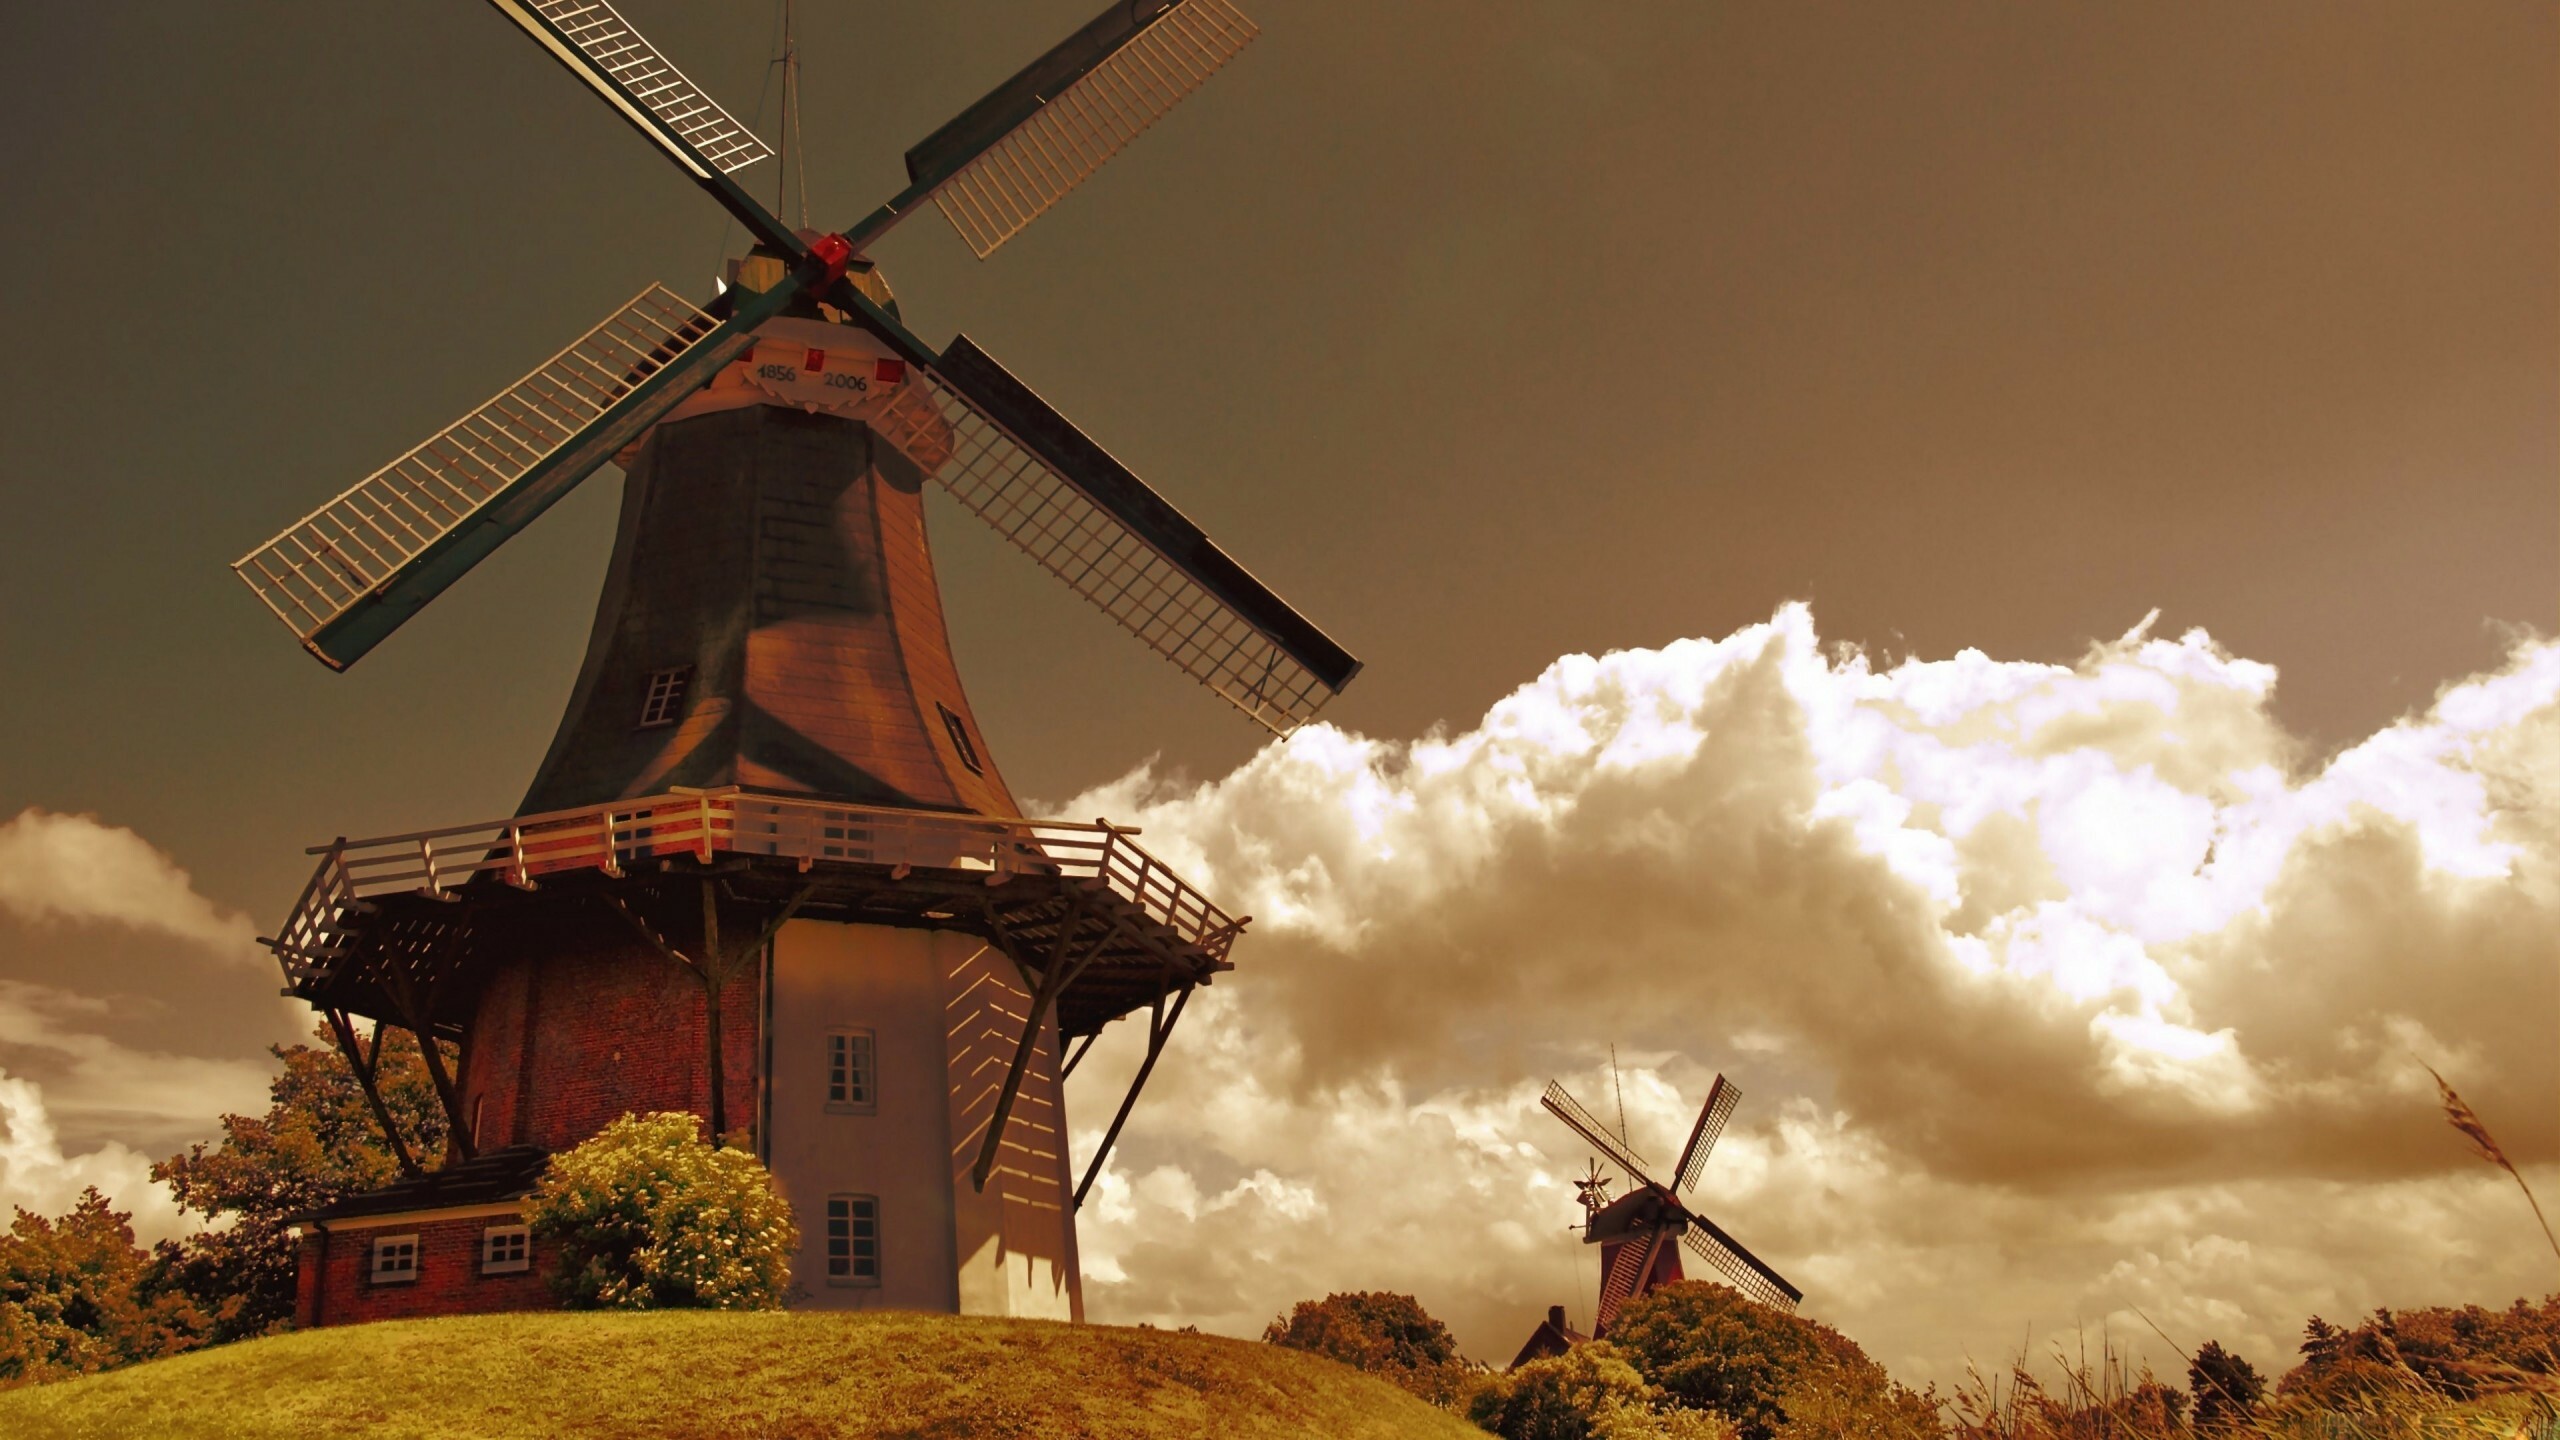 Netherlands: A complex system of windmills was built to pump water from the marshlands, Dutch landmark. 2560x1440 HD Wallpaper.